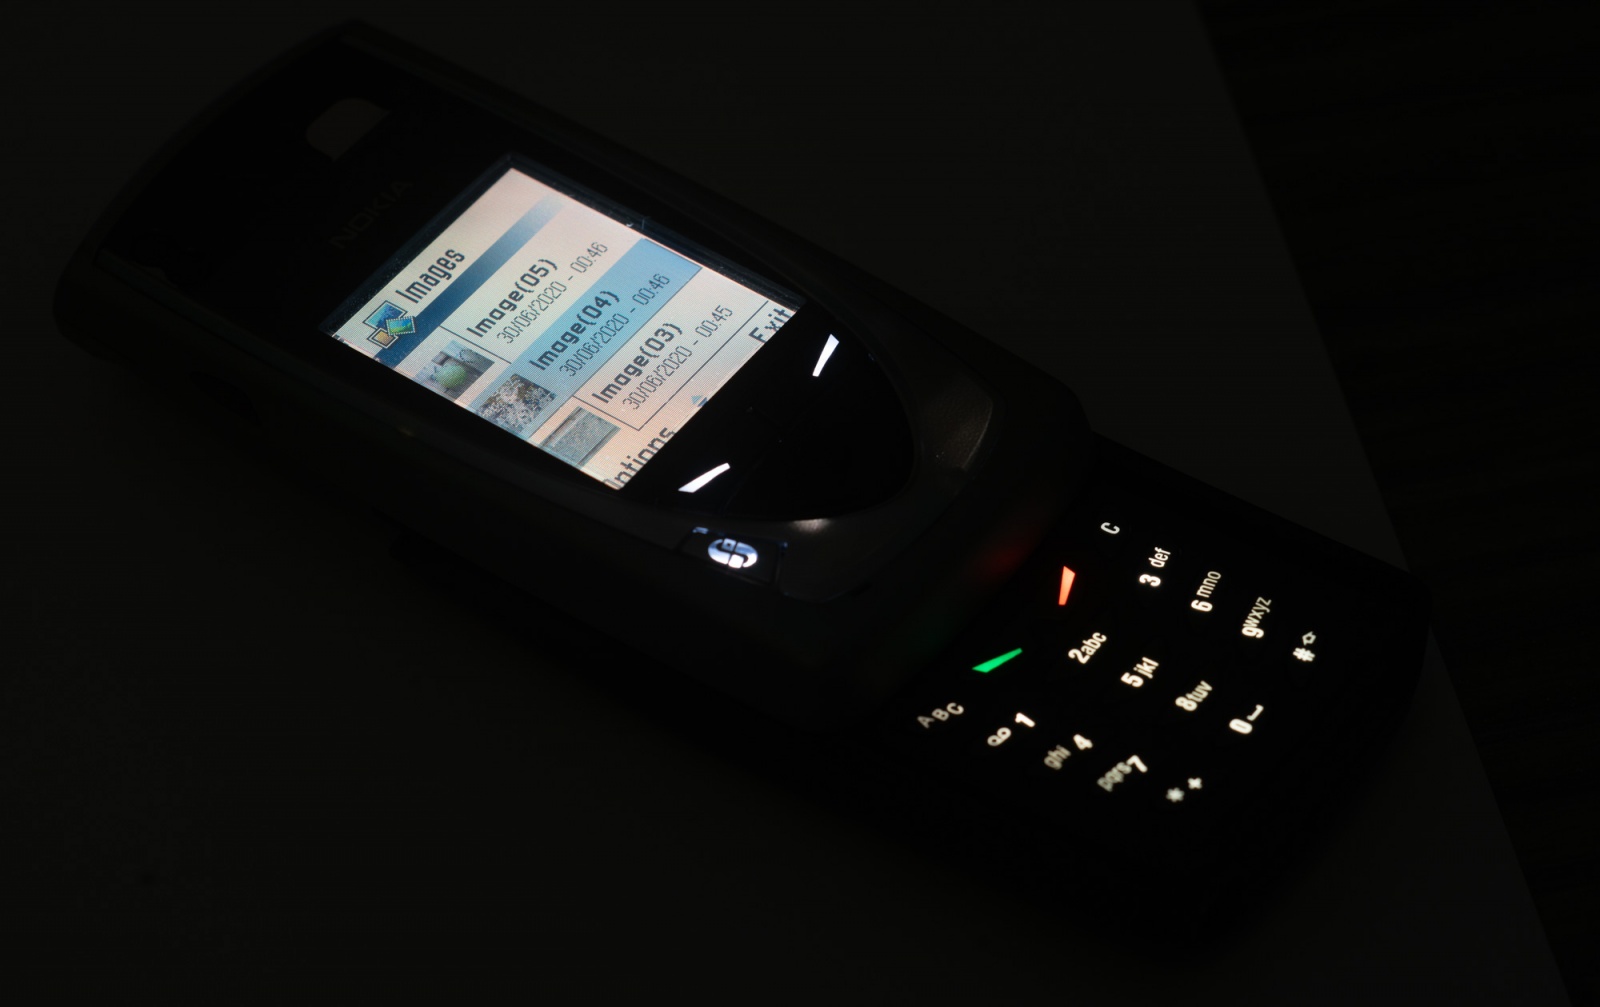 Nokia 7650 и начало эпохи смартфонов - 19